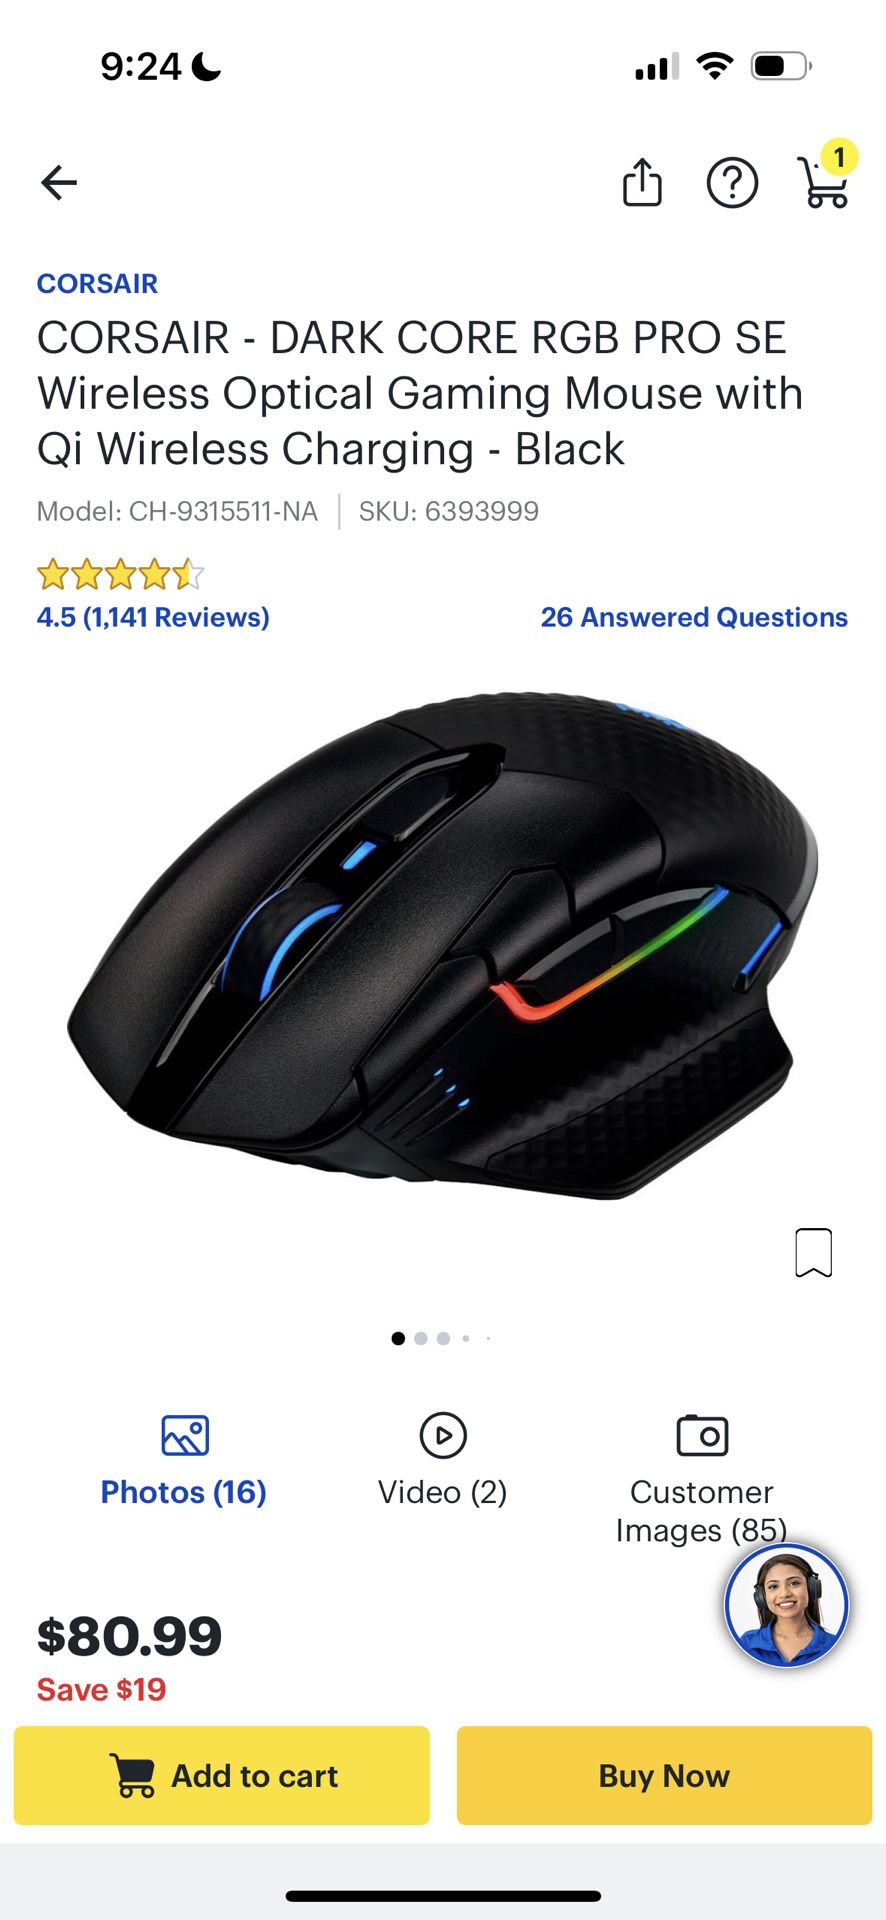 CORSAIR - DARK CORE RGB PRO SE Wireless Gaming Mouse